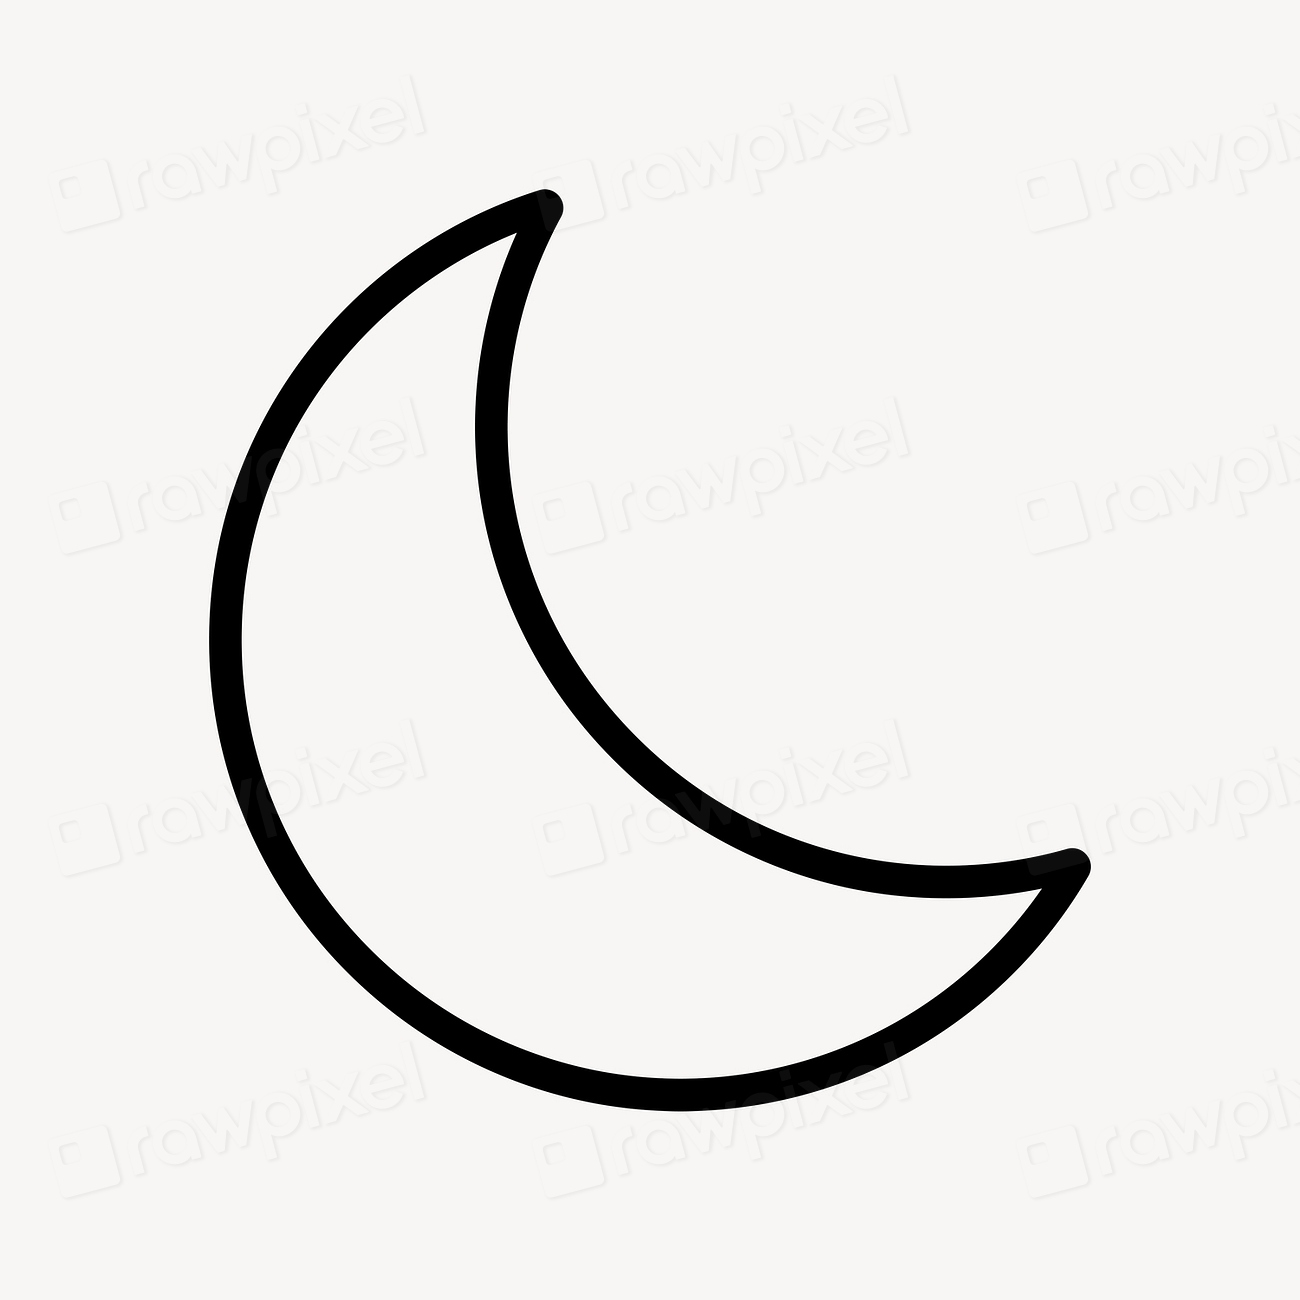 Crescent moon line icon, minimal | Free Icons - rawpixel